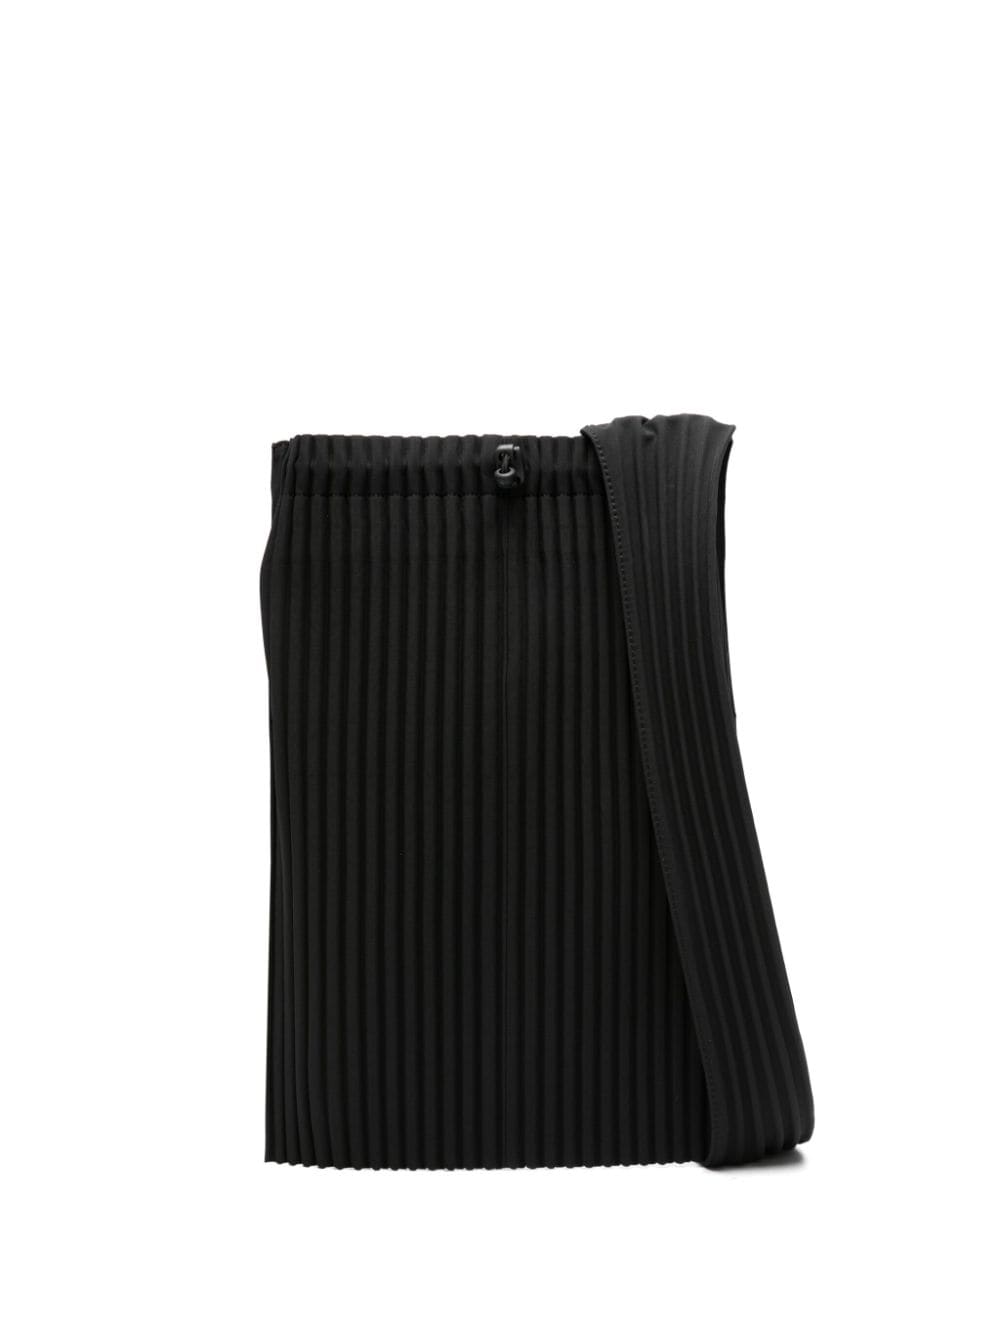 Issey Miyake Pocket 1 Pleated Shoulder Bag In Black